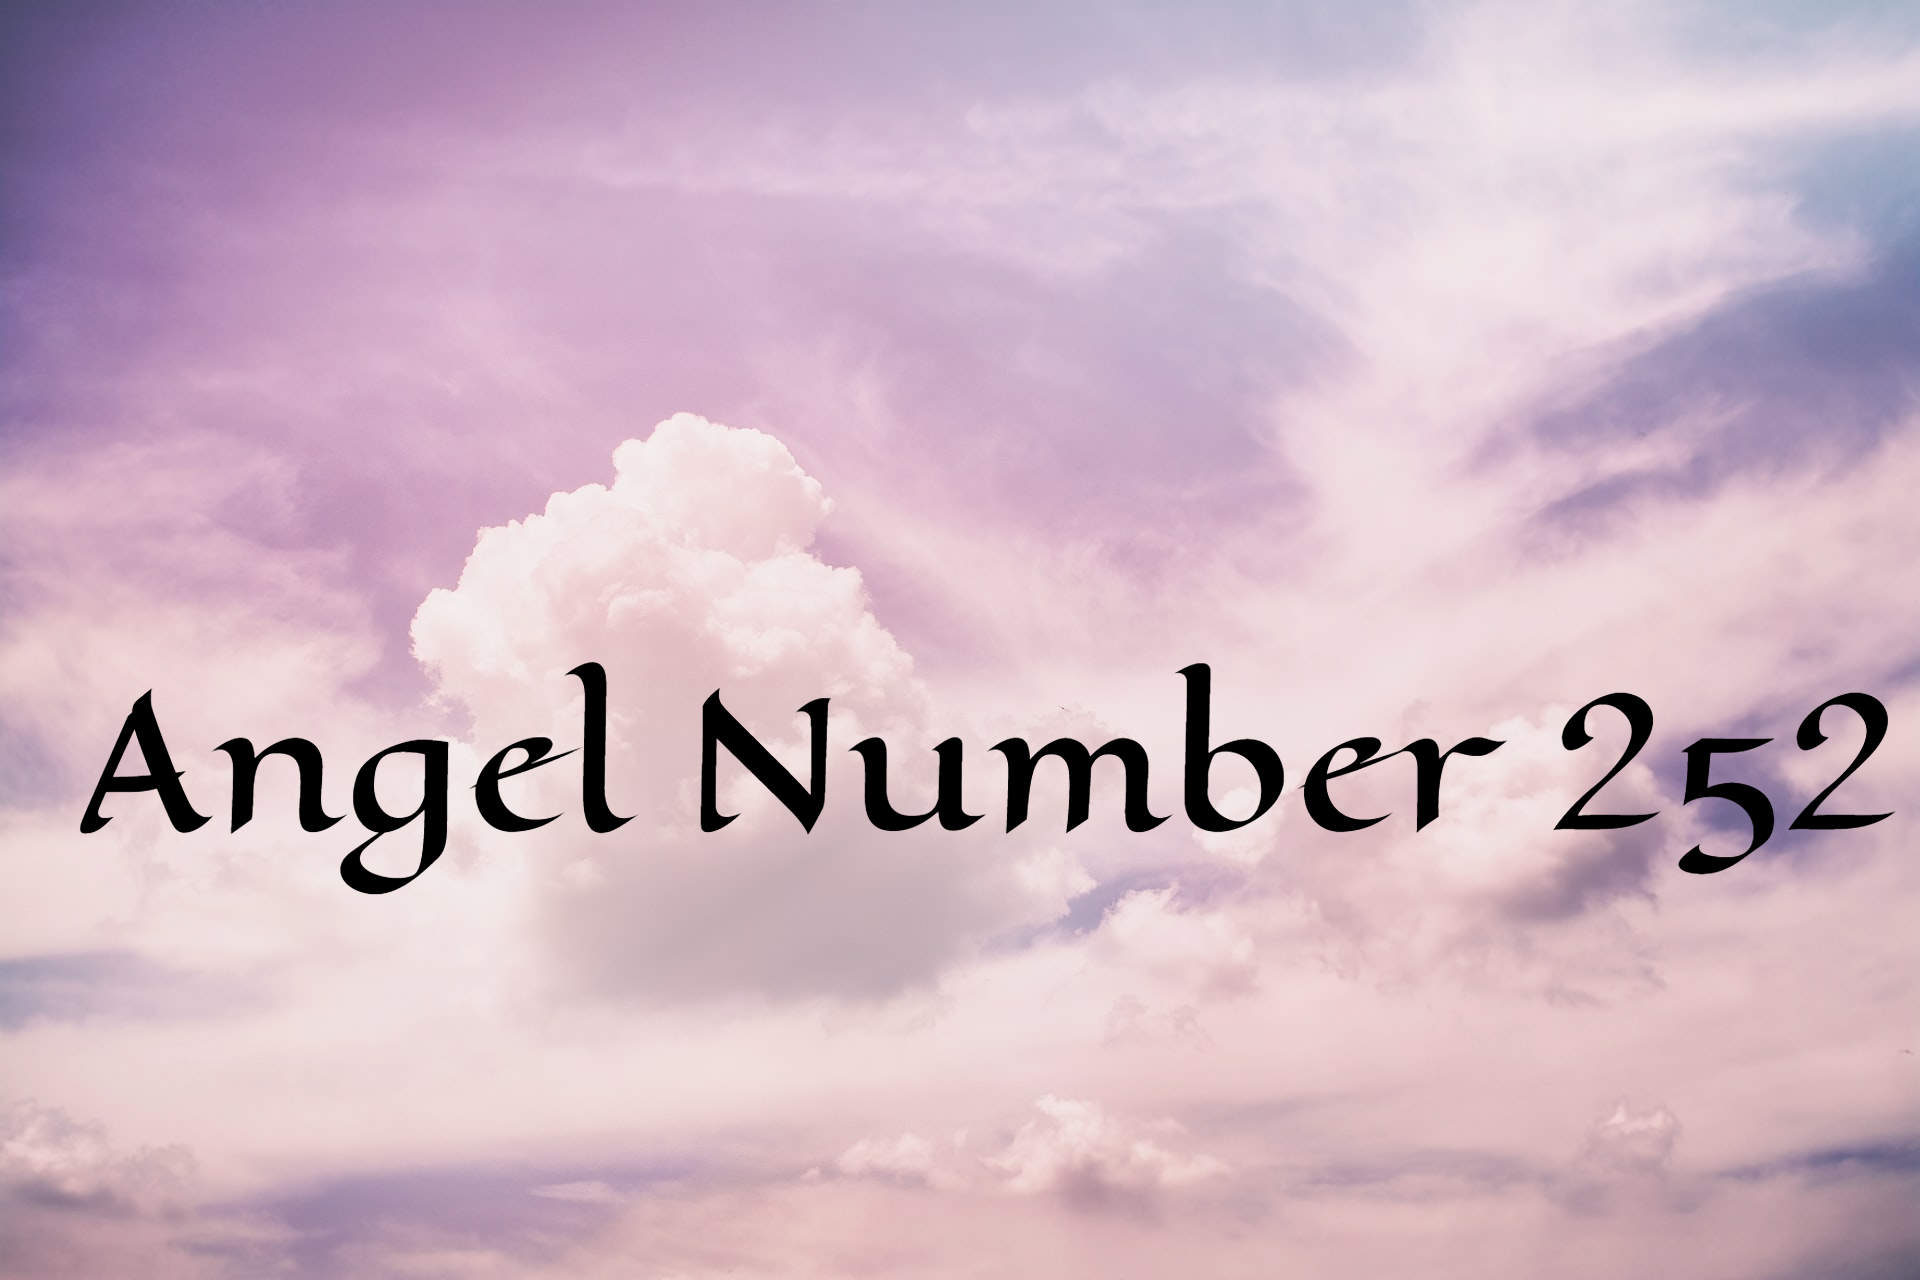 Angel Number 252 Symbolism - Love And Relationship